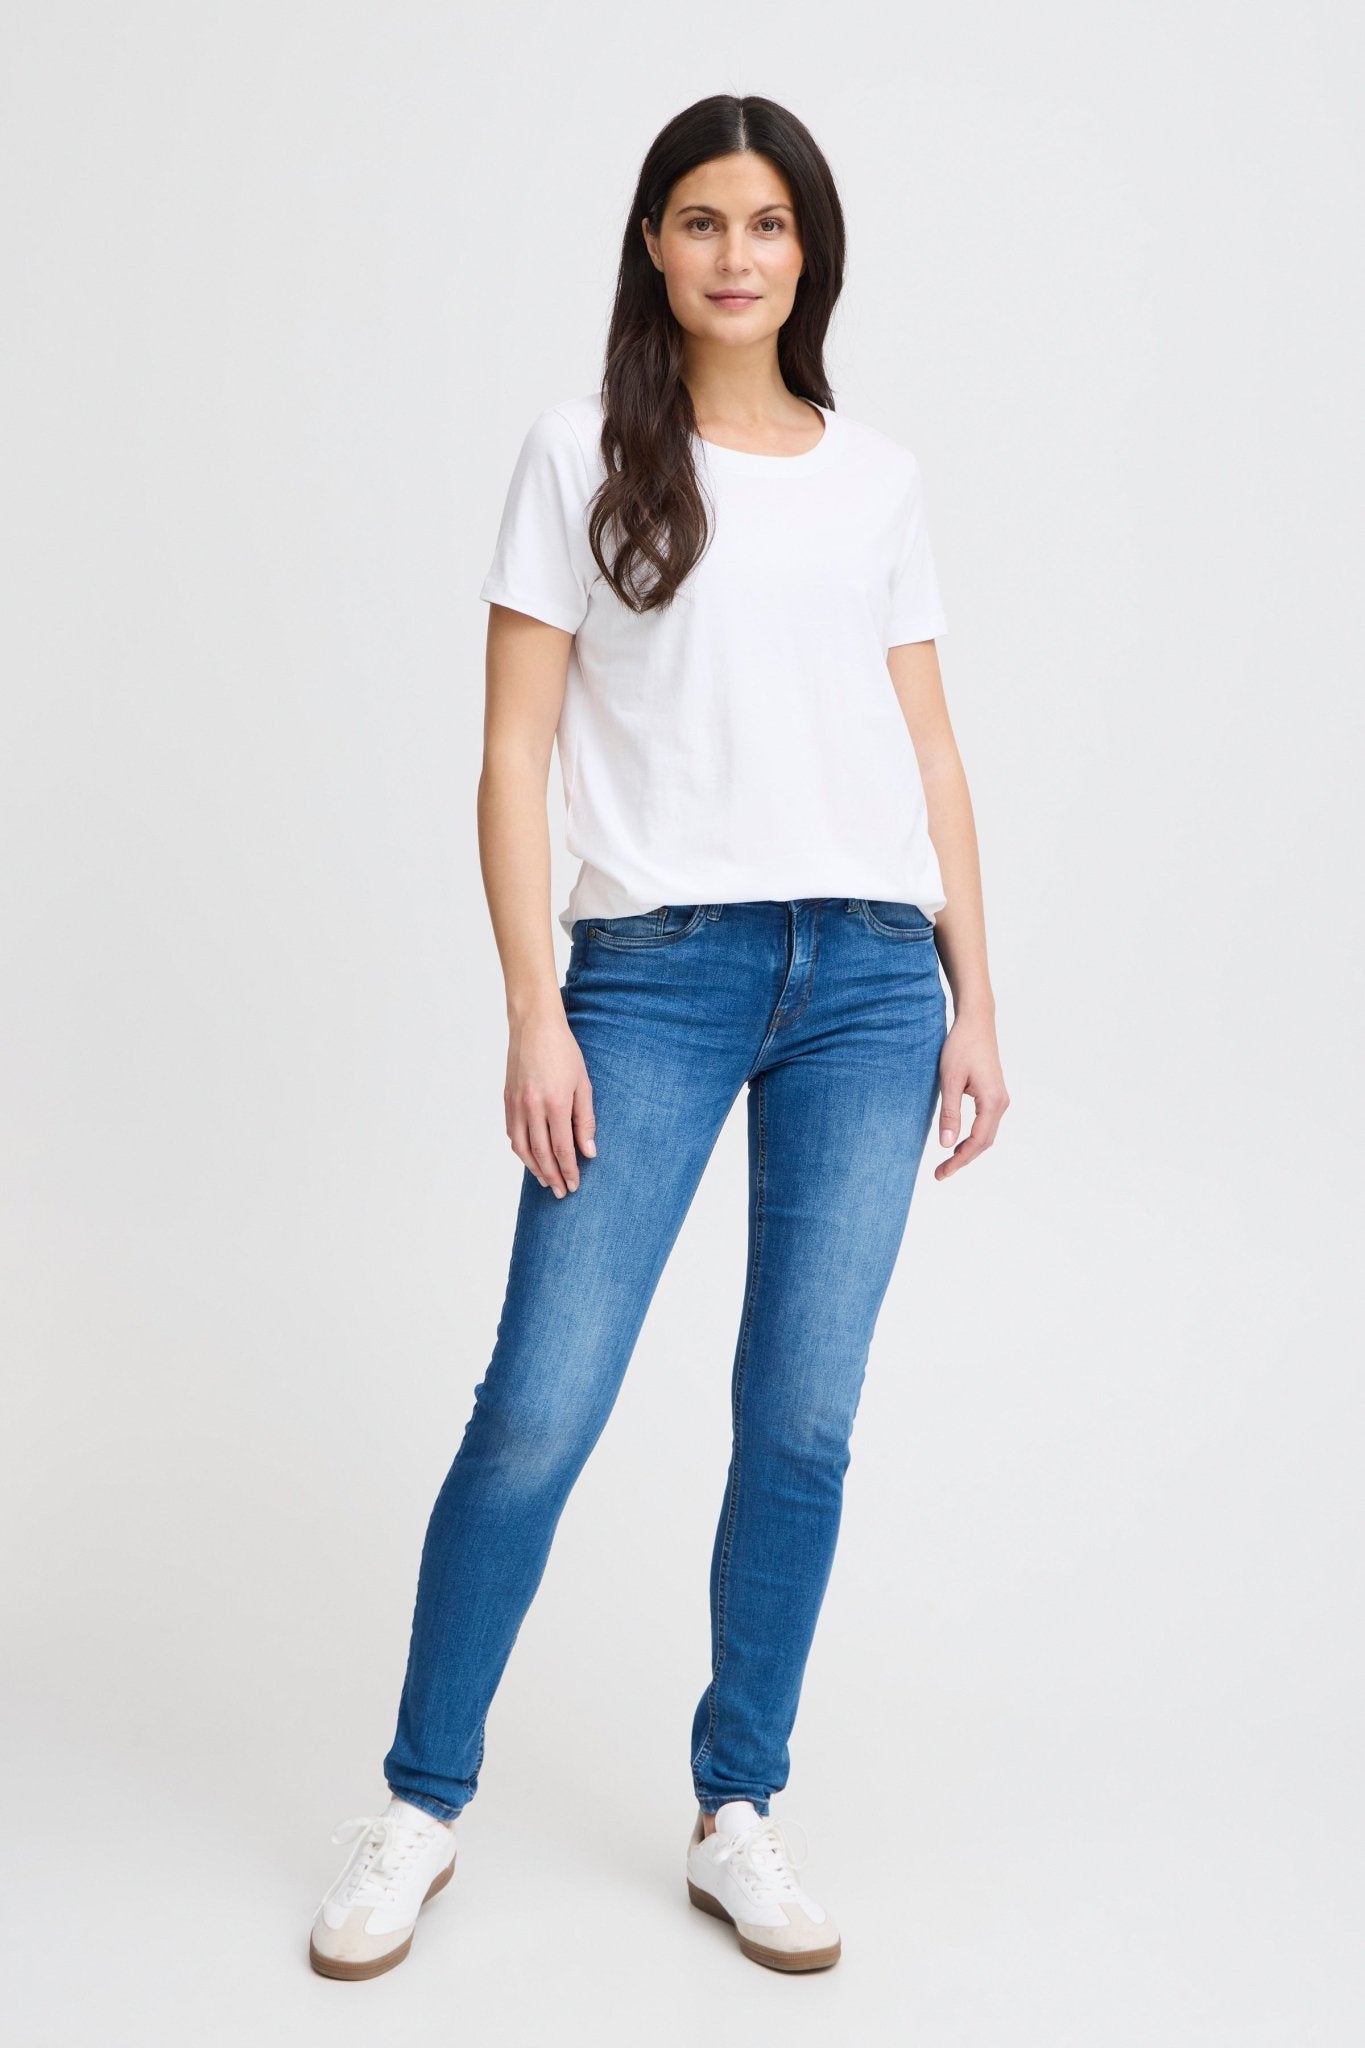 Zashoulder T-shirt by Fransa - white - Blue Sky Fashions & Lingerie